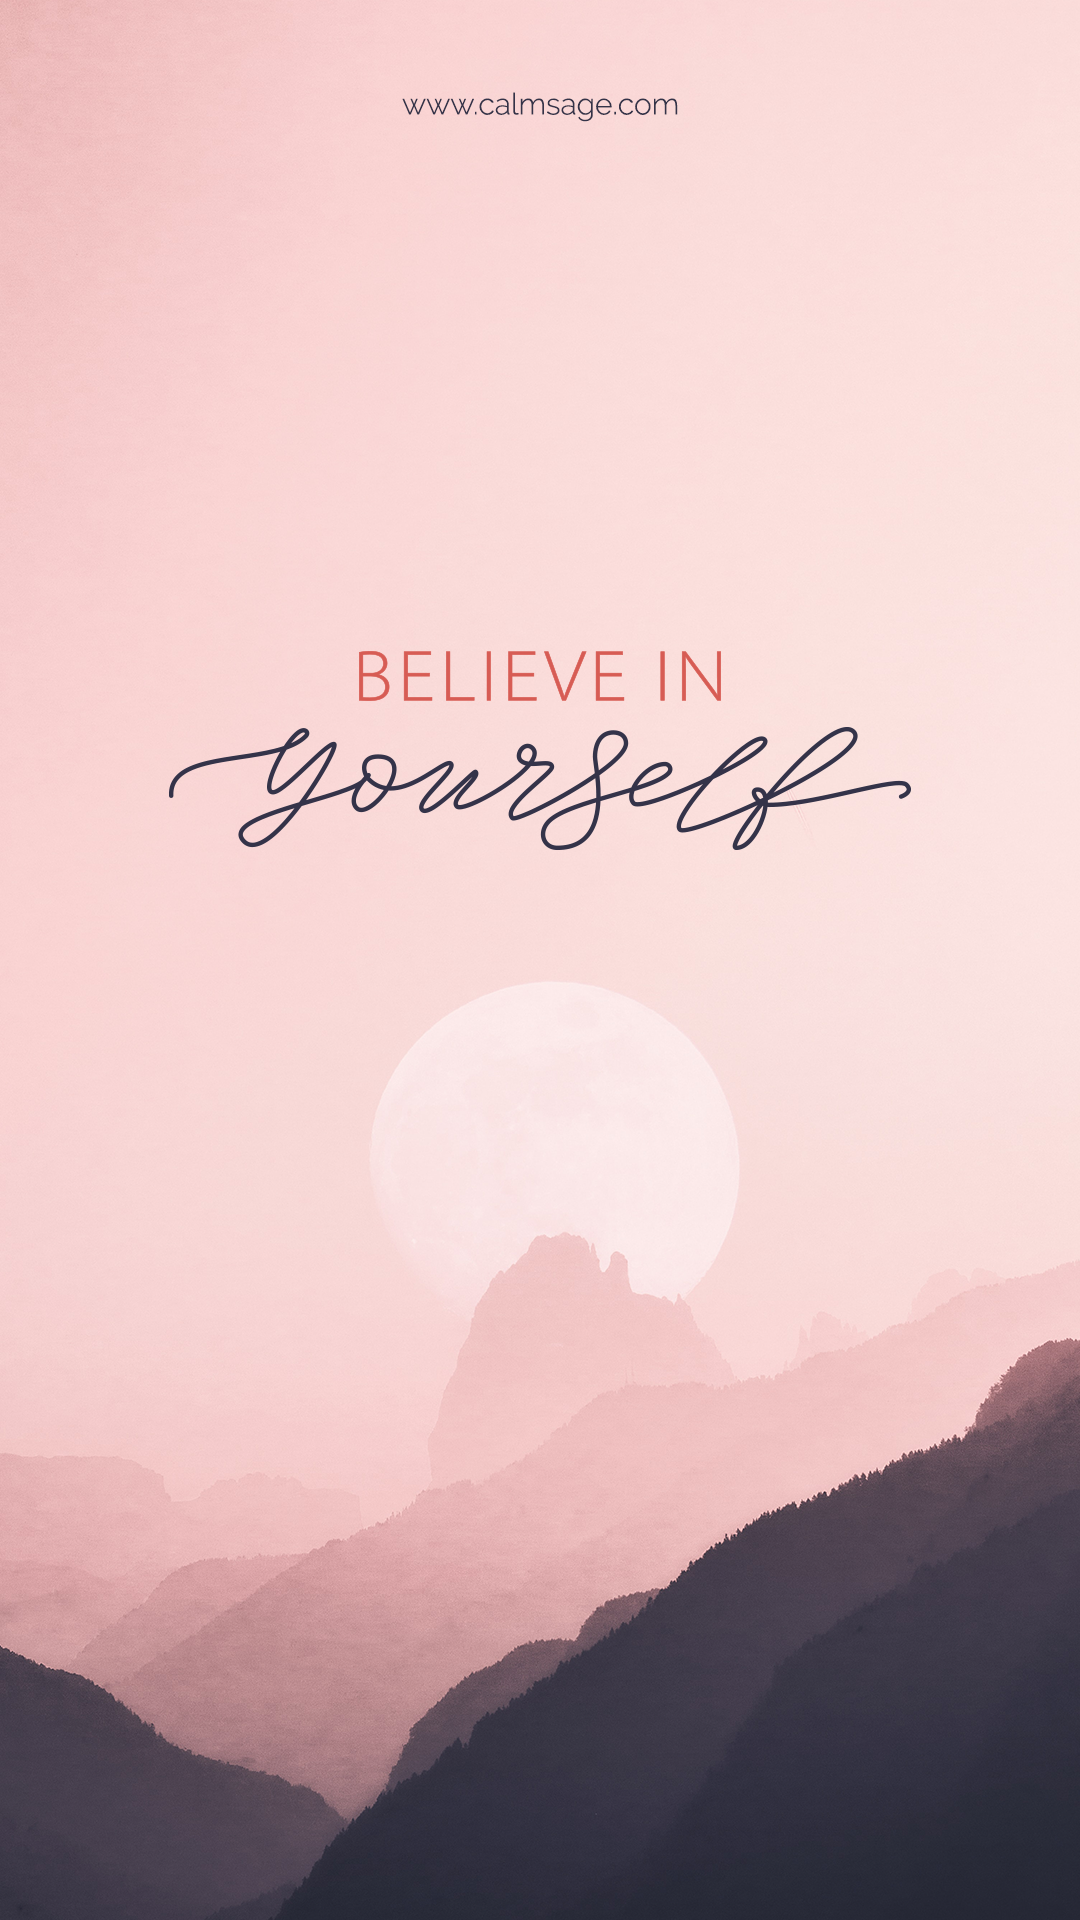 Believe in yourself â mobile wallpaper